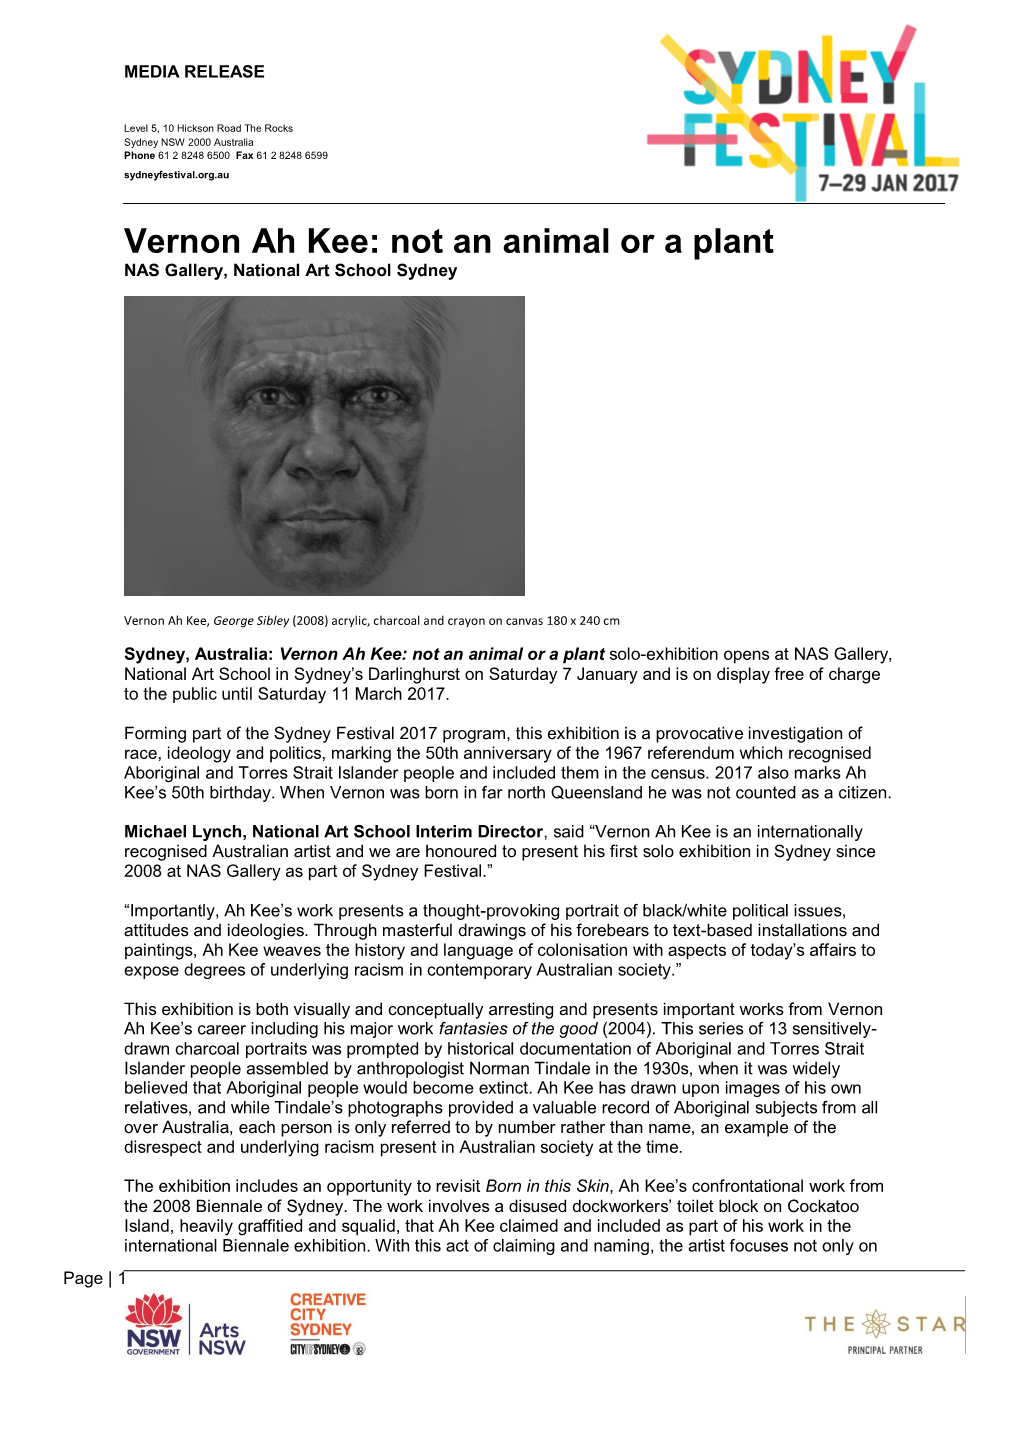 Vernon Ah Kee: Not an Animal Or a Plant NAS Gallery, National Art School Sydney